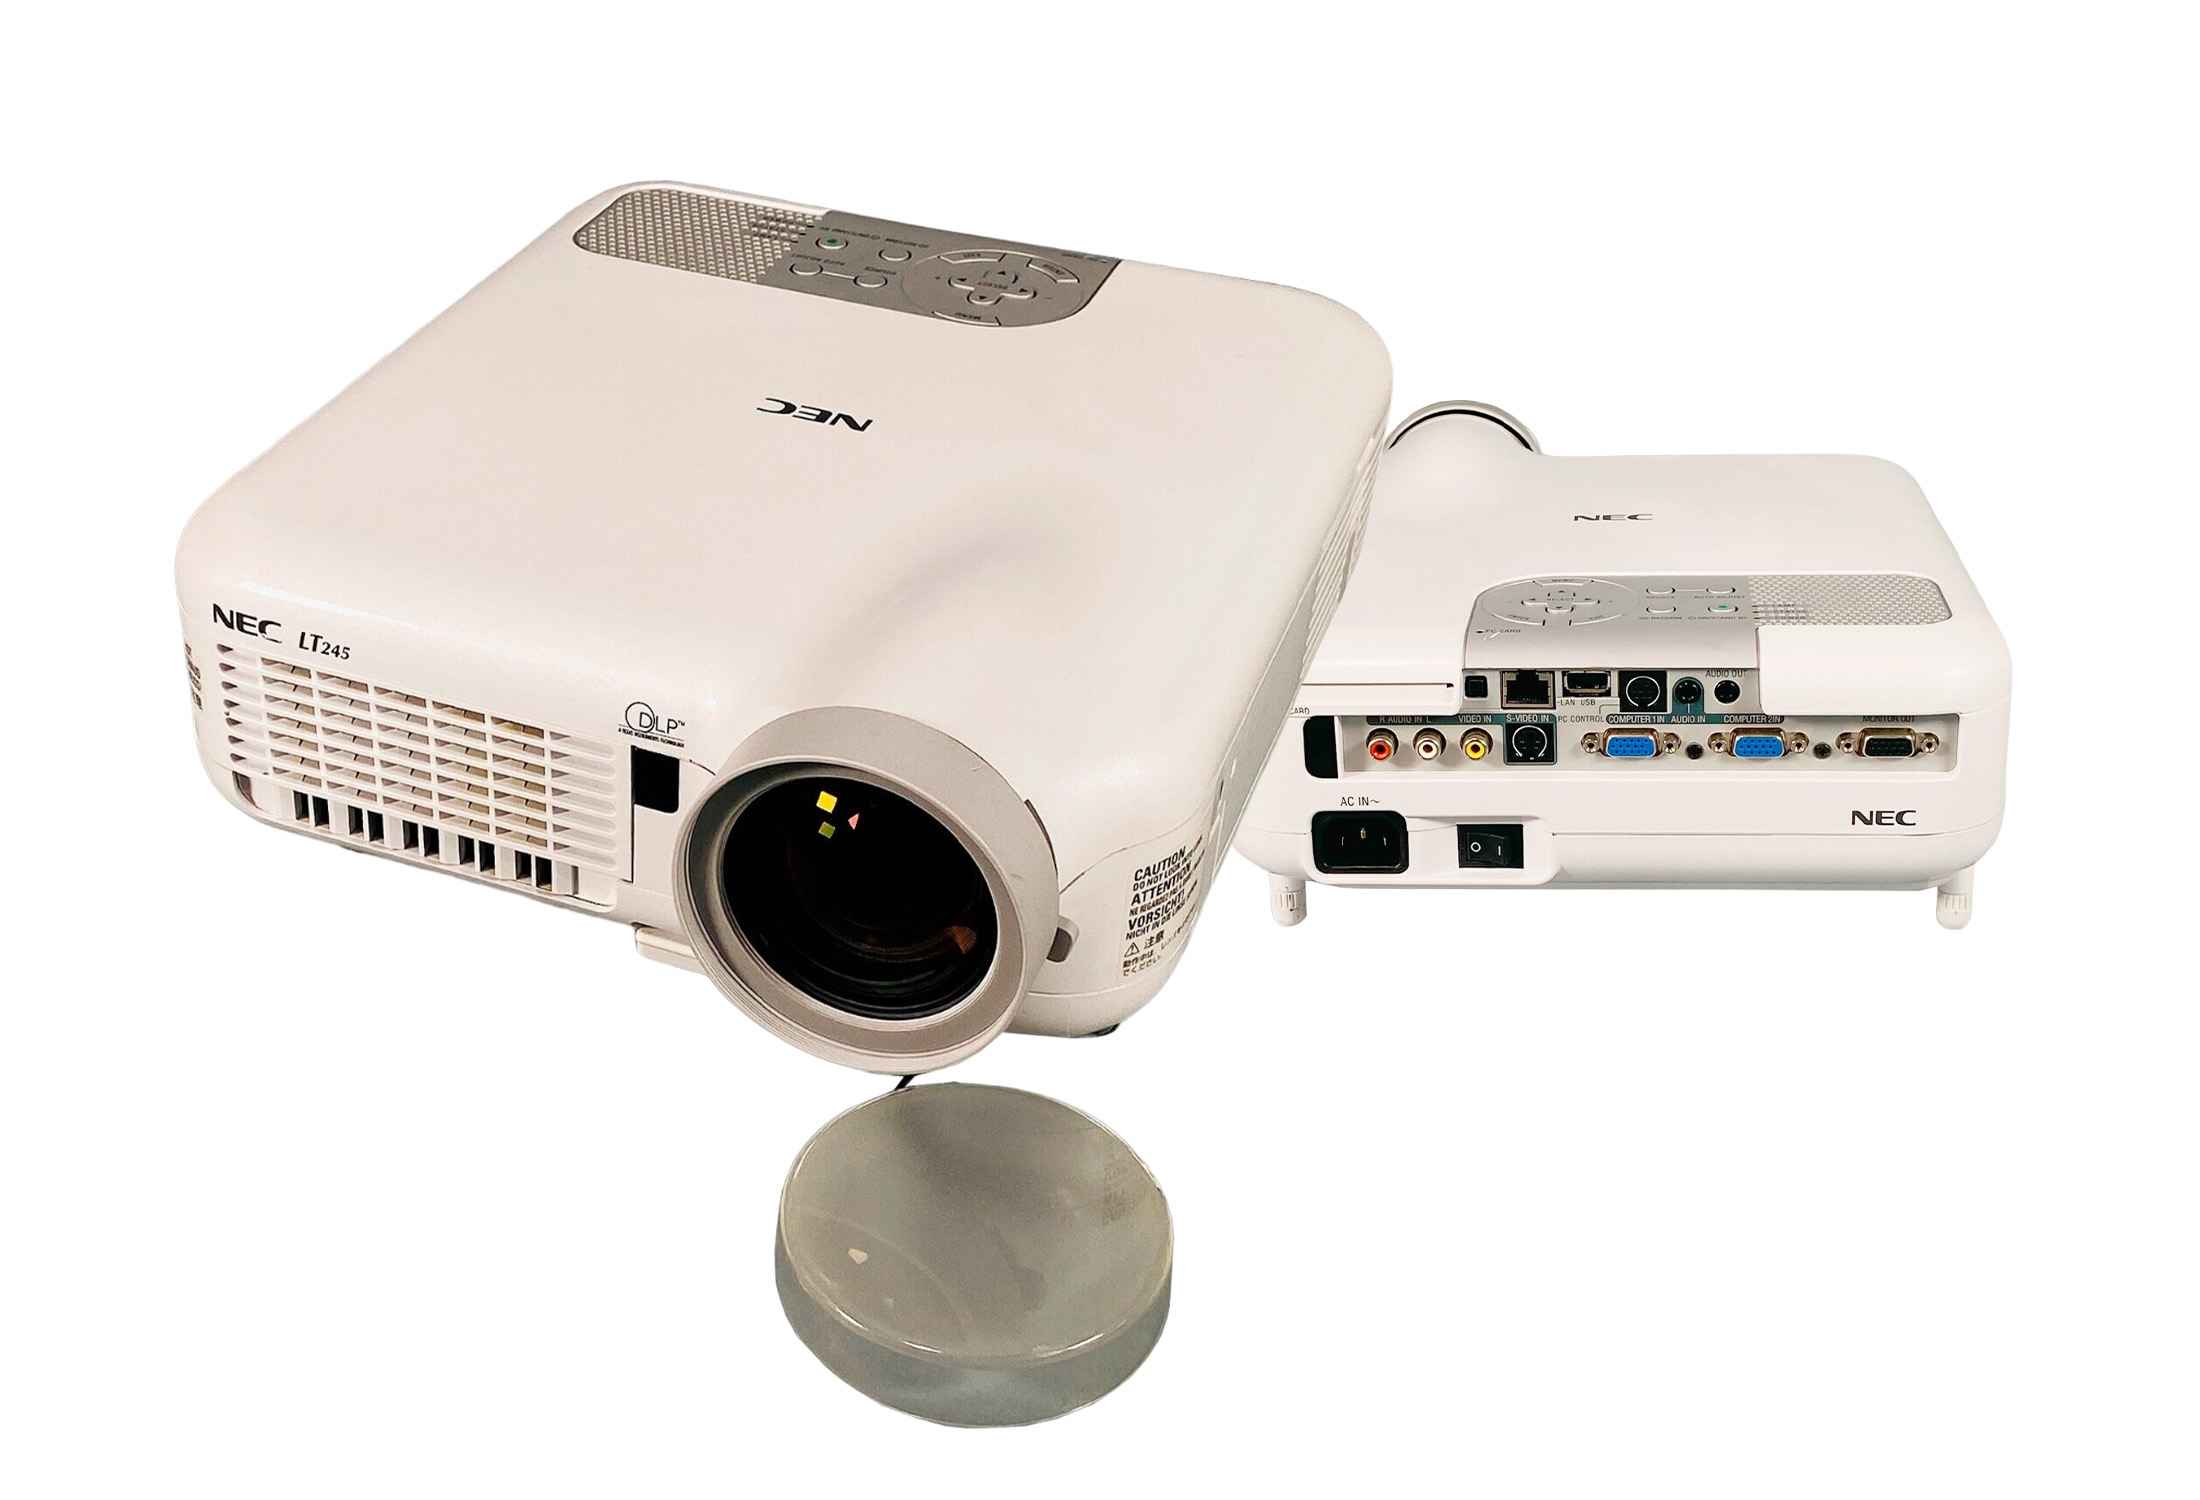 NEC LT245 Projector DLP 2200 ANSI Lumens-DBcqM.jpeg